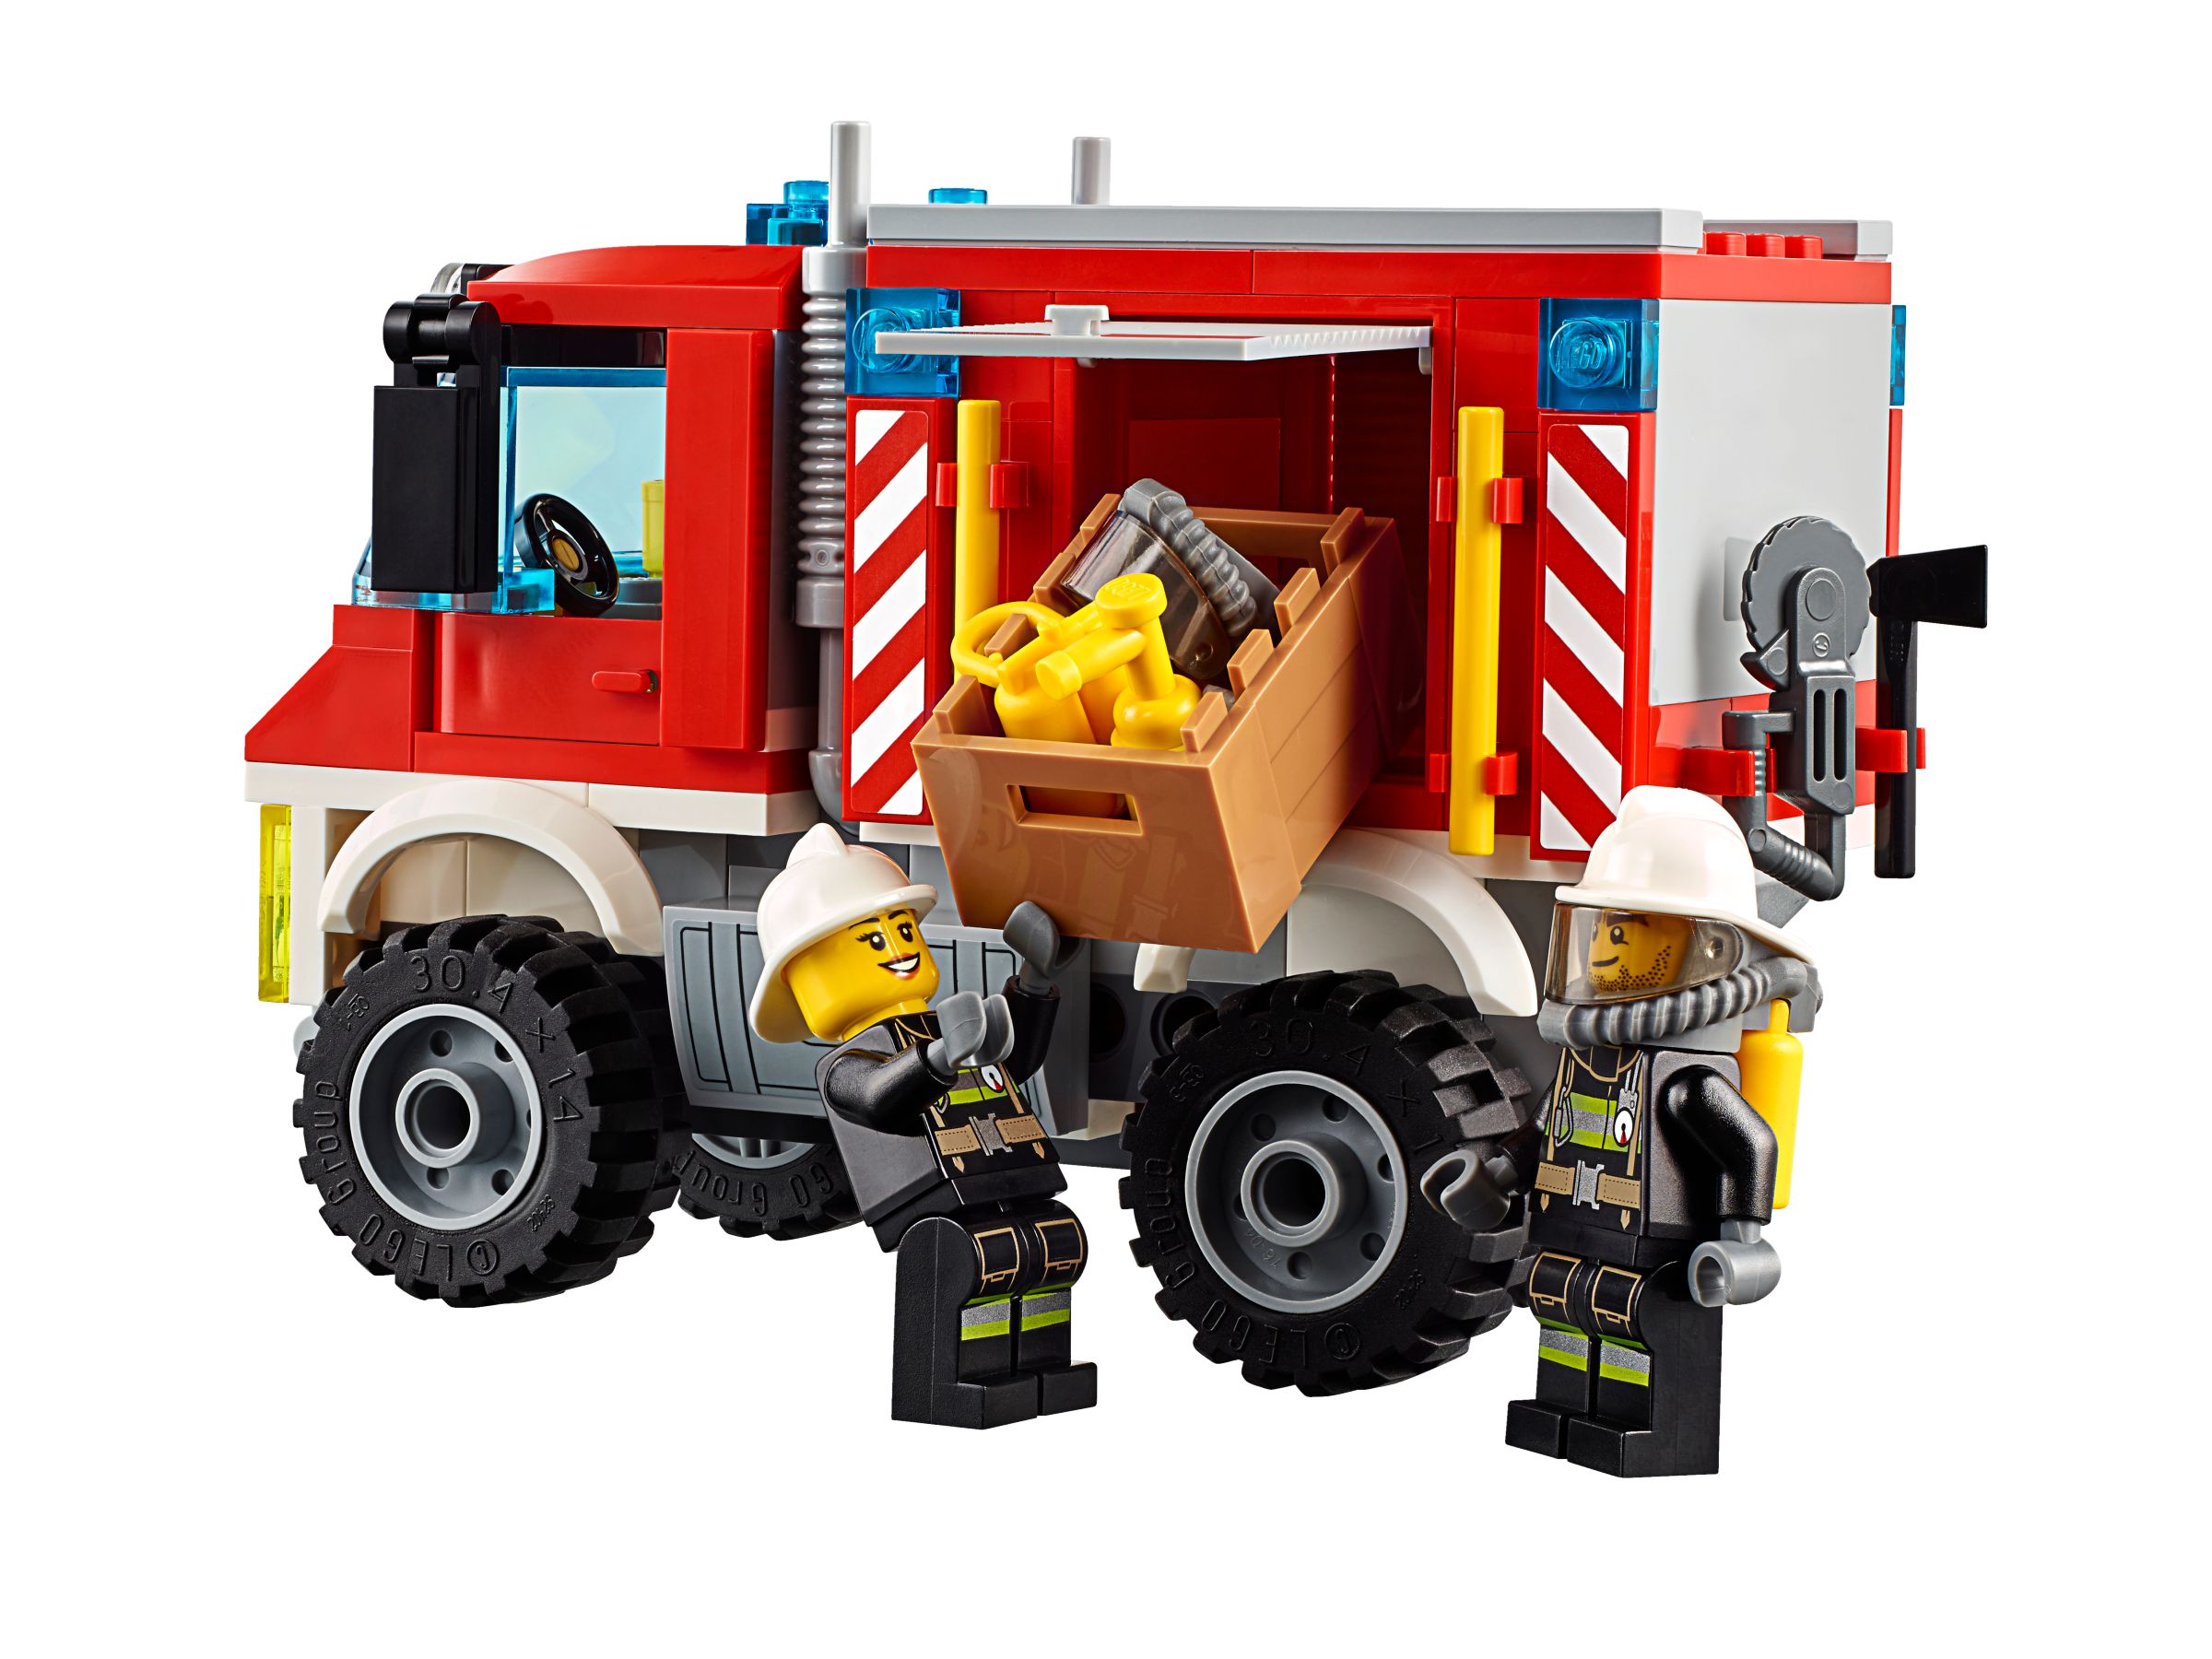 LEGO City 60111 Feuerwehr-Einsatzfahrzeug LEGO_60111_alt3.jpg